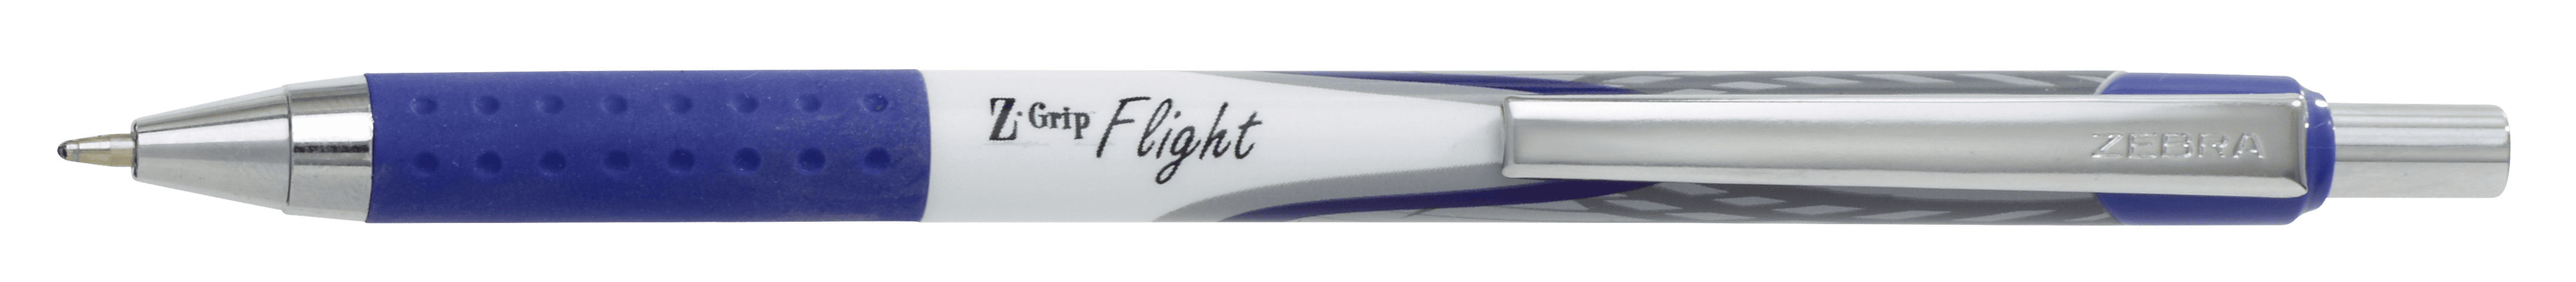 Z-Grip Flight ballpoint pen